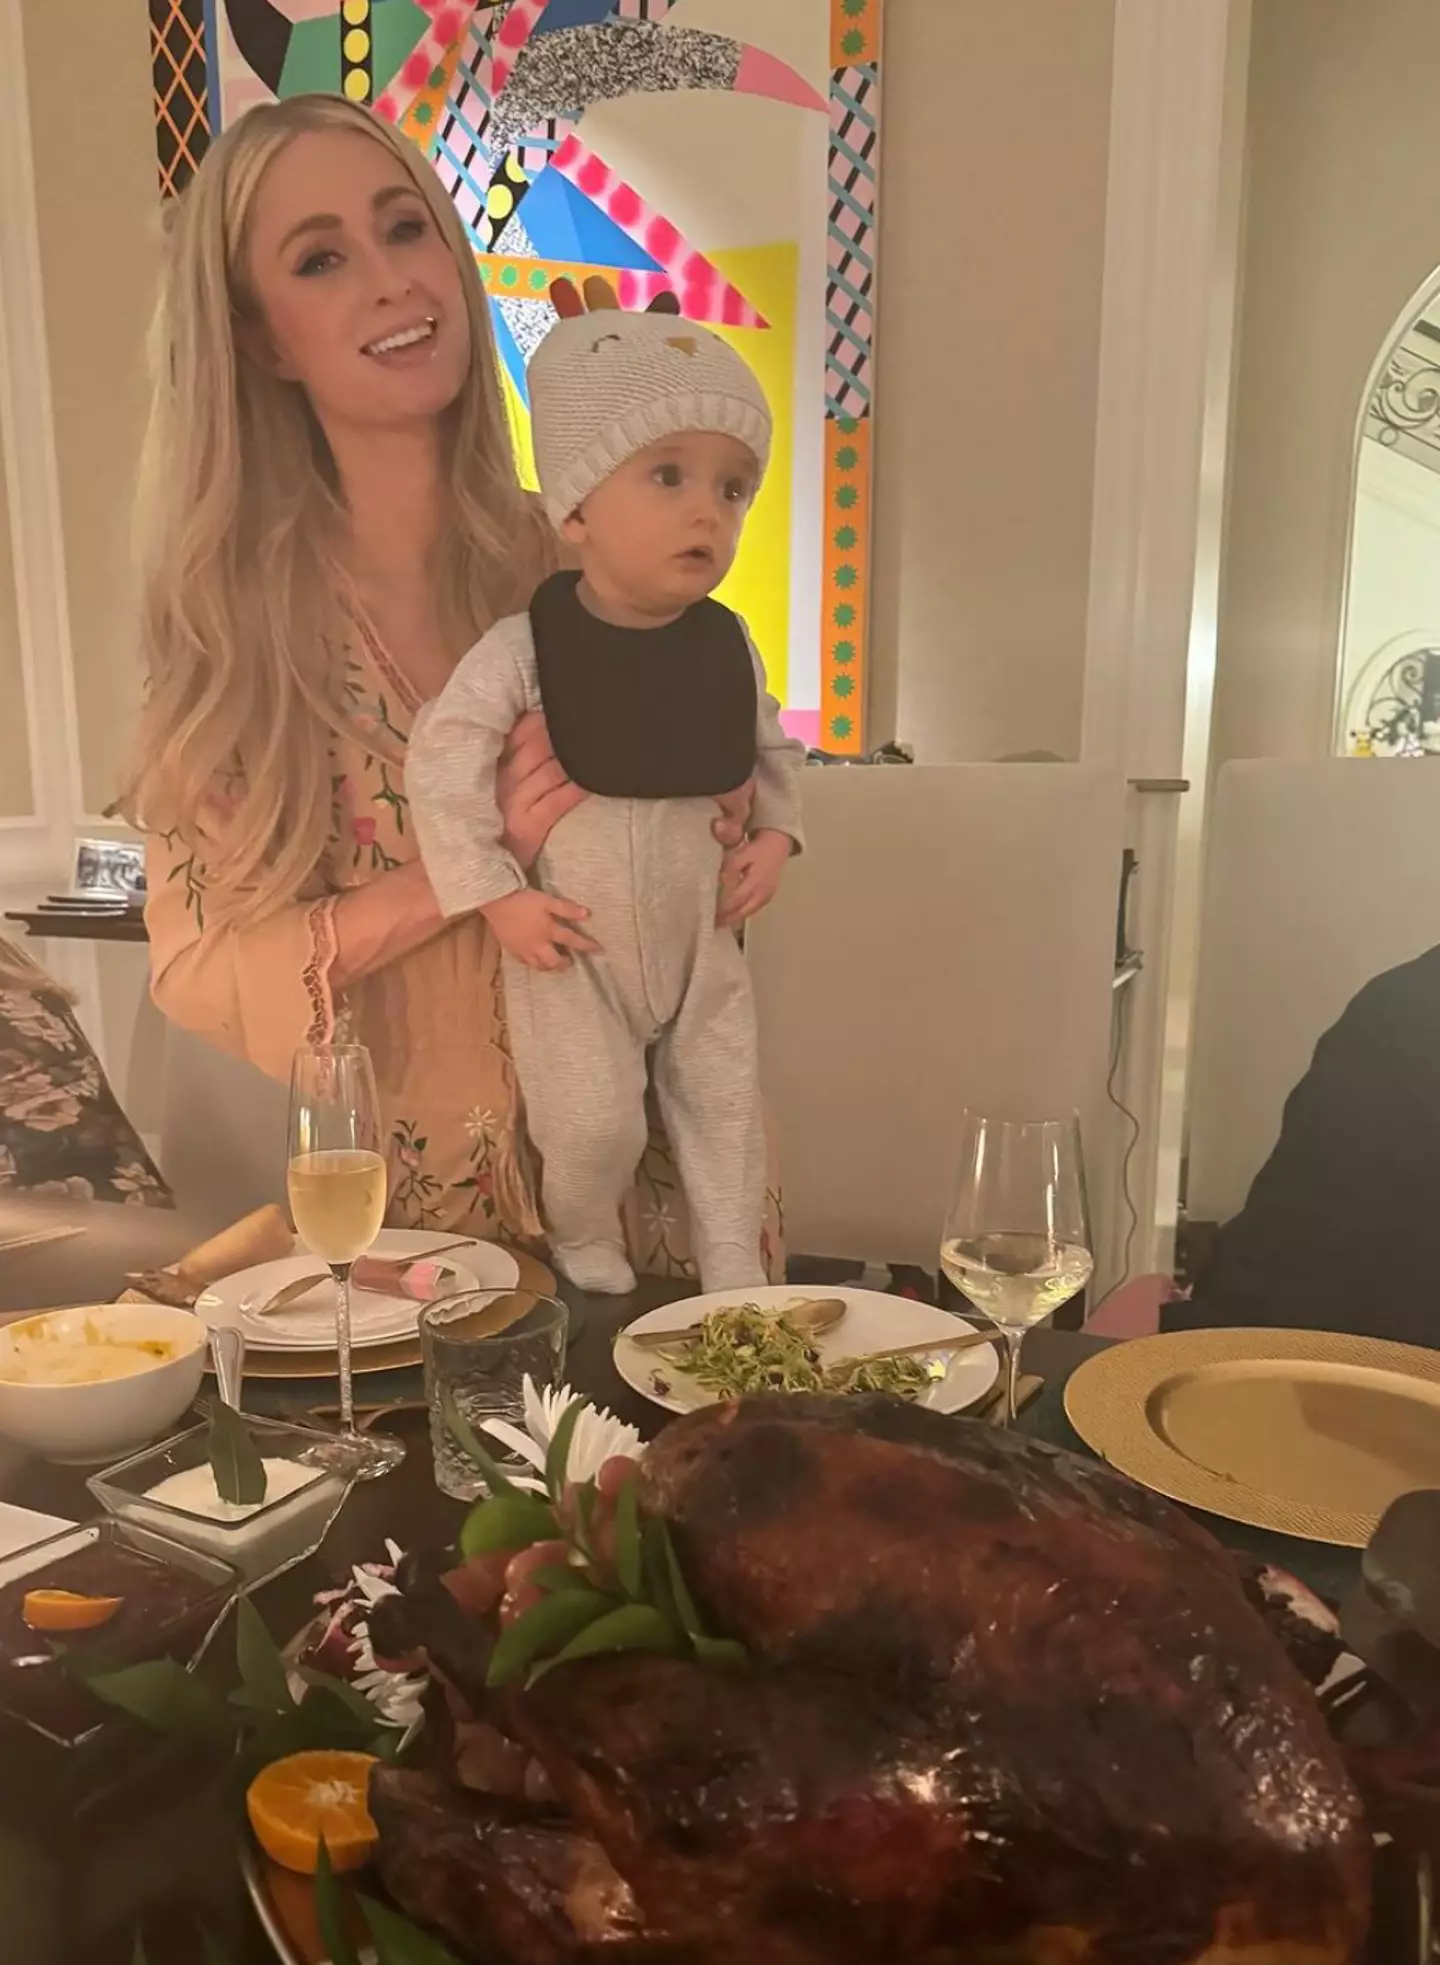 Paris celebrated Thanksgiving with her children.